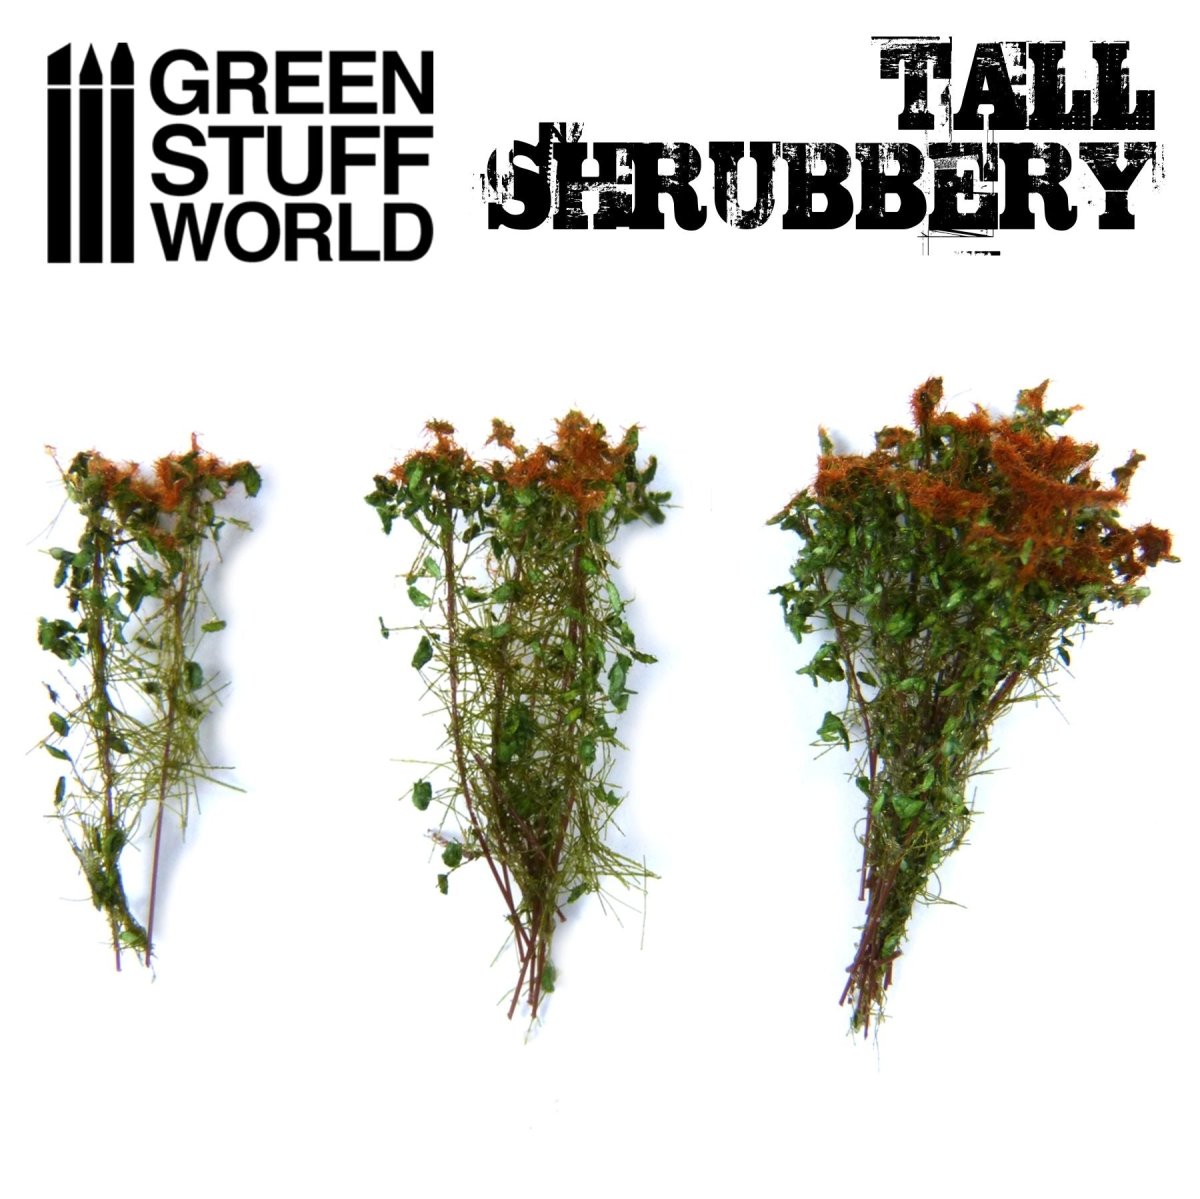 Tall Shrubbery - Brown Green 4CM tall - Green Stuff World - 1 blister pack - Gootzy Gaming